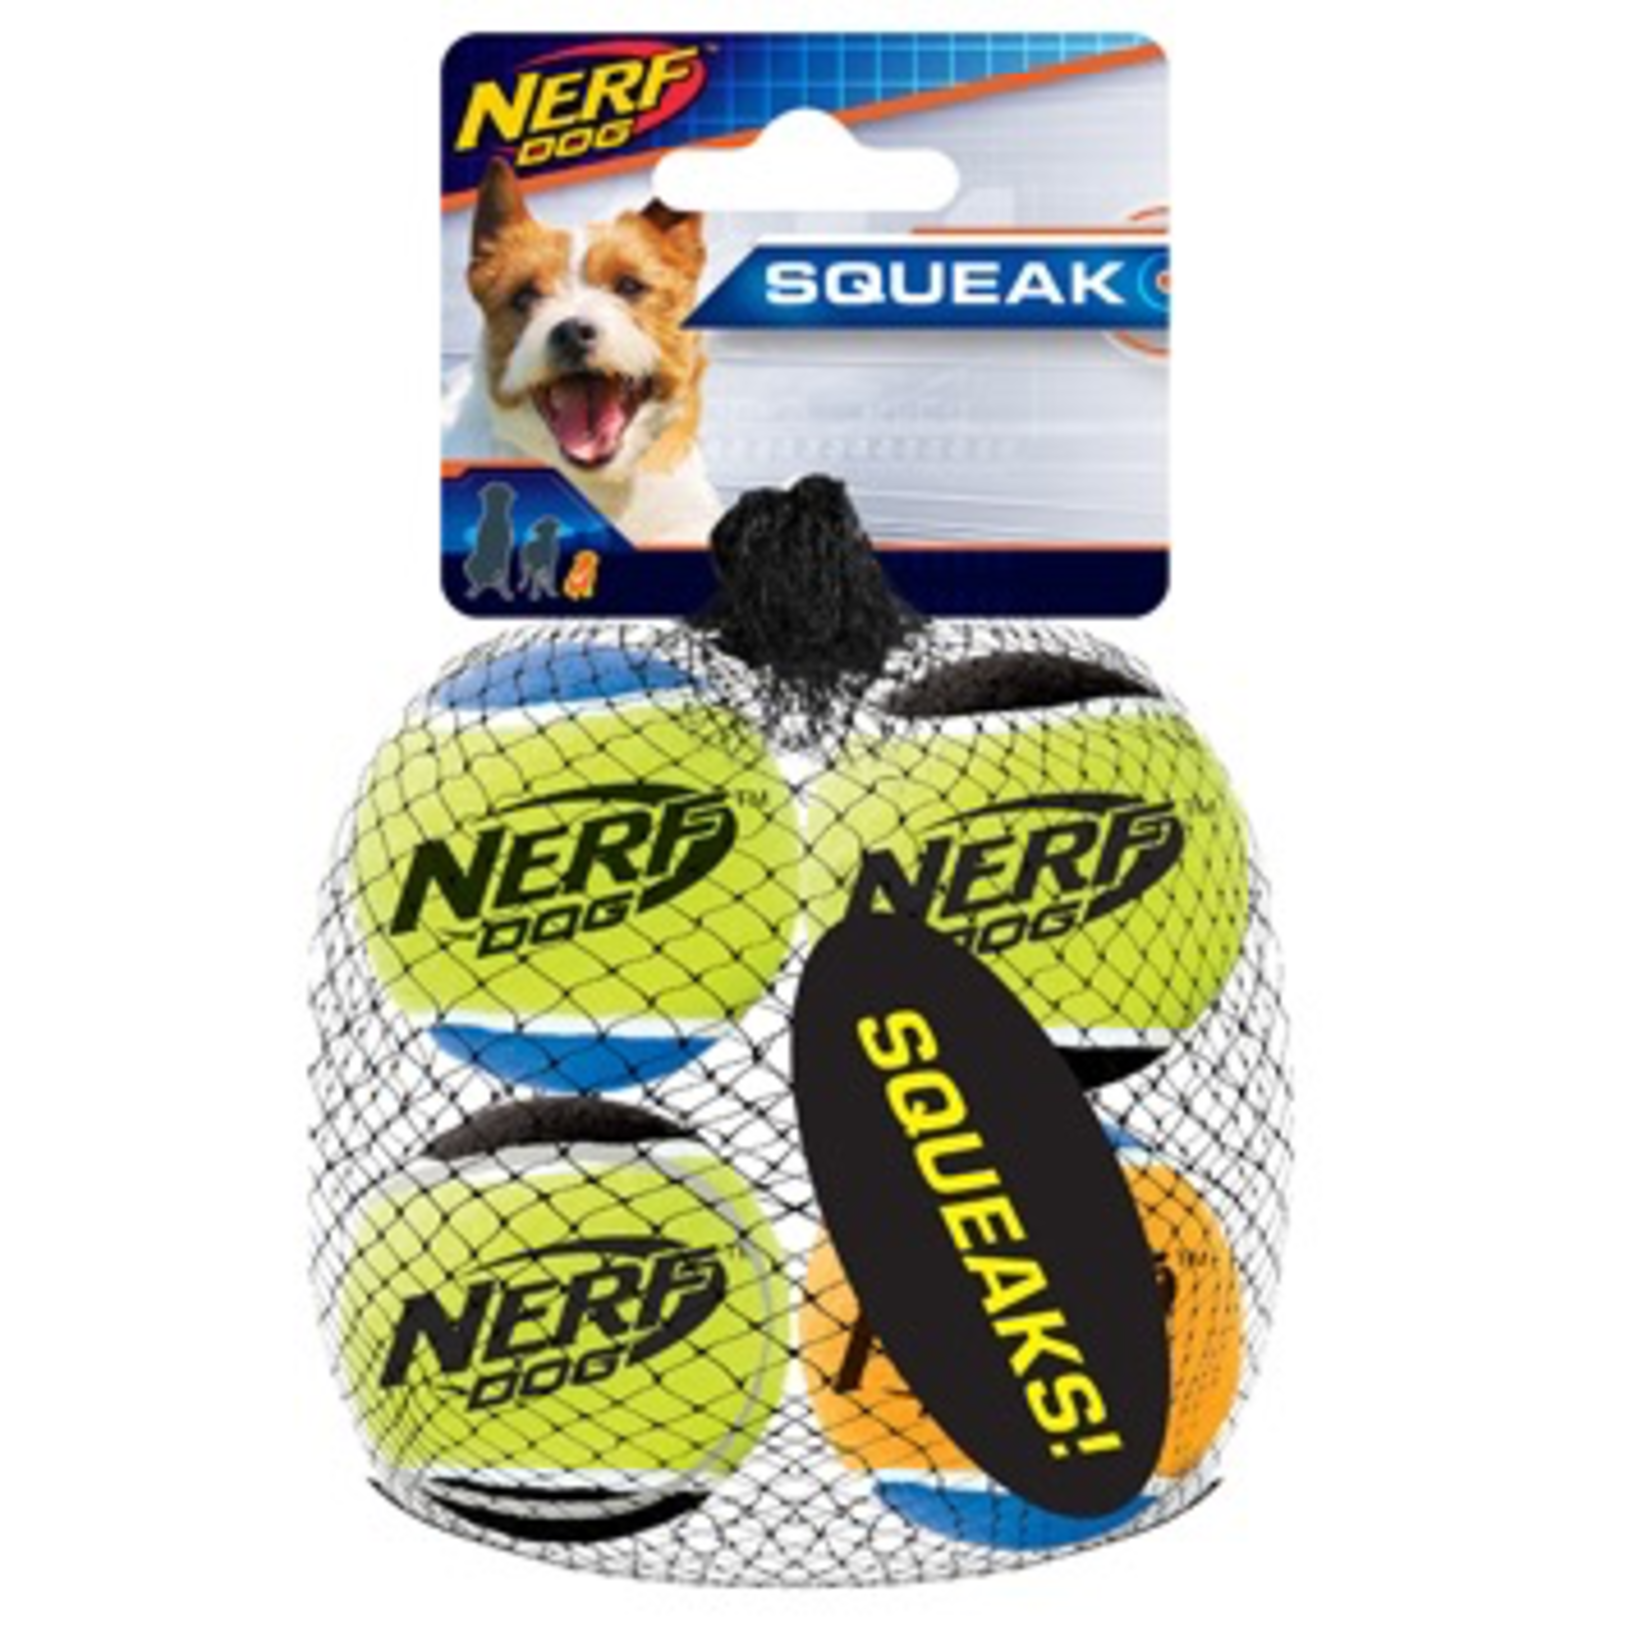 NERF (W) Nerf Dog Squeak Tennis Balls, 4pk, X-Small, 1.75in